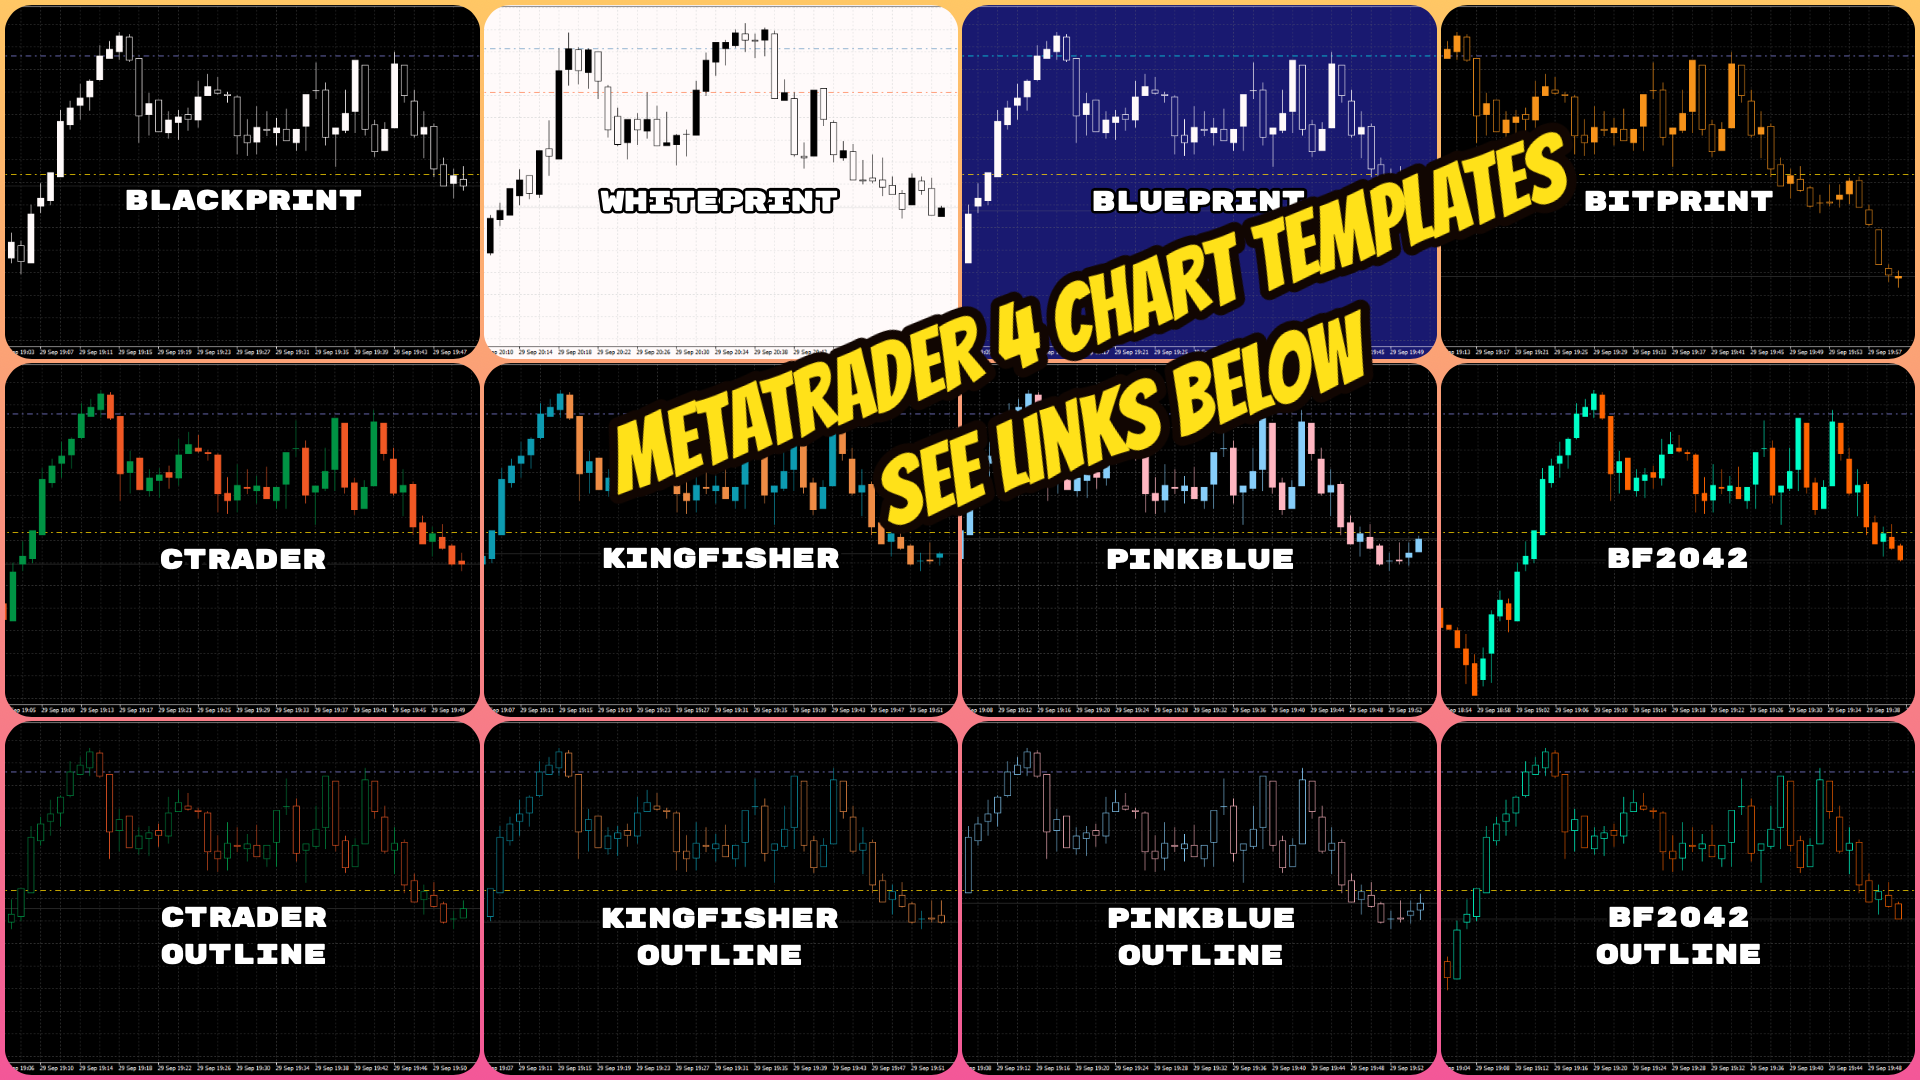 MetaTrader 4 compared to TradingView platform